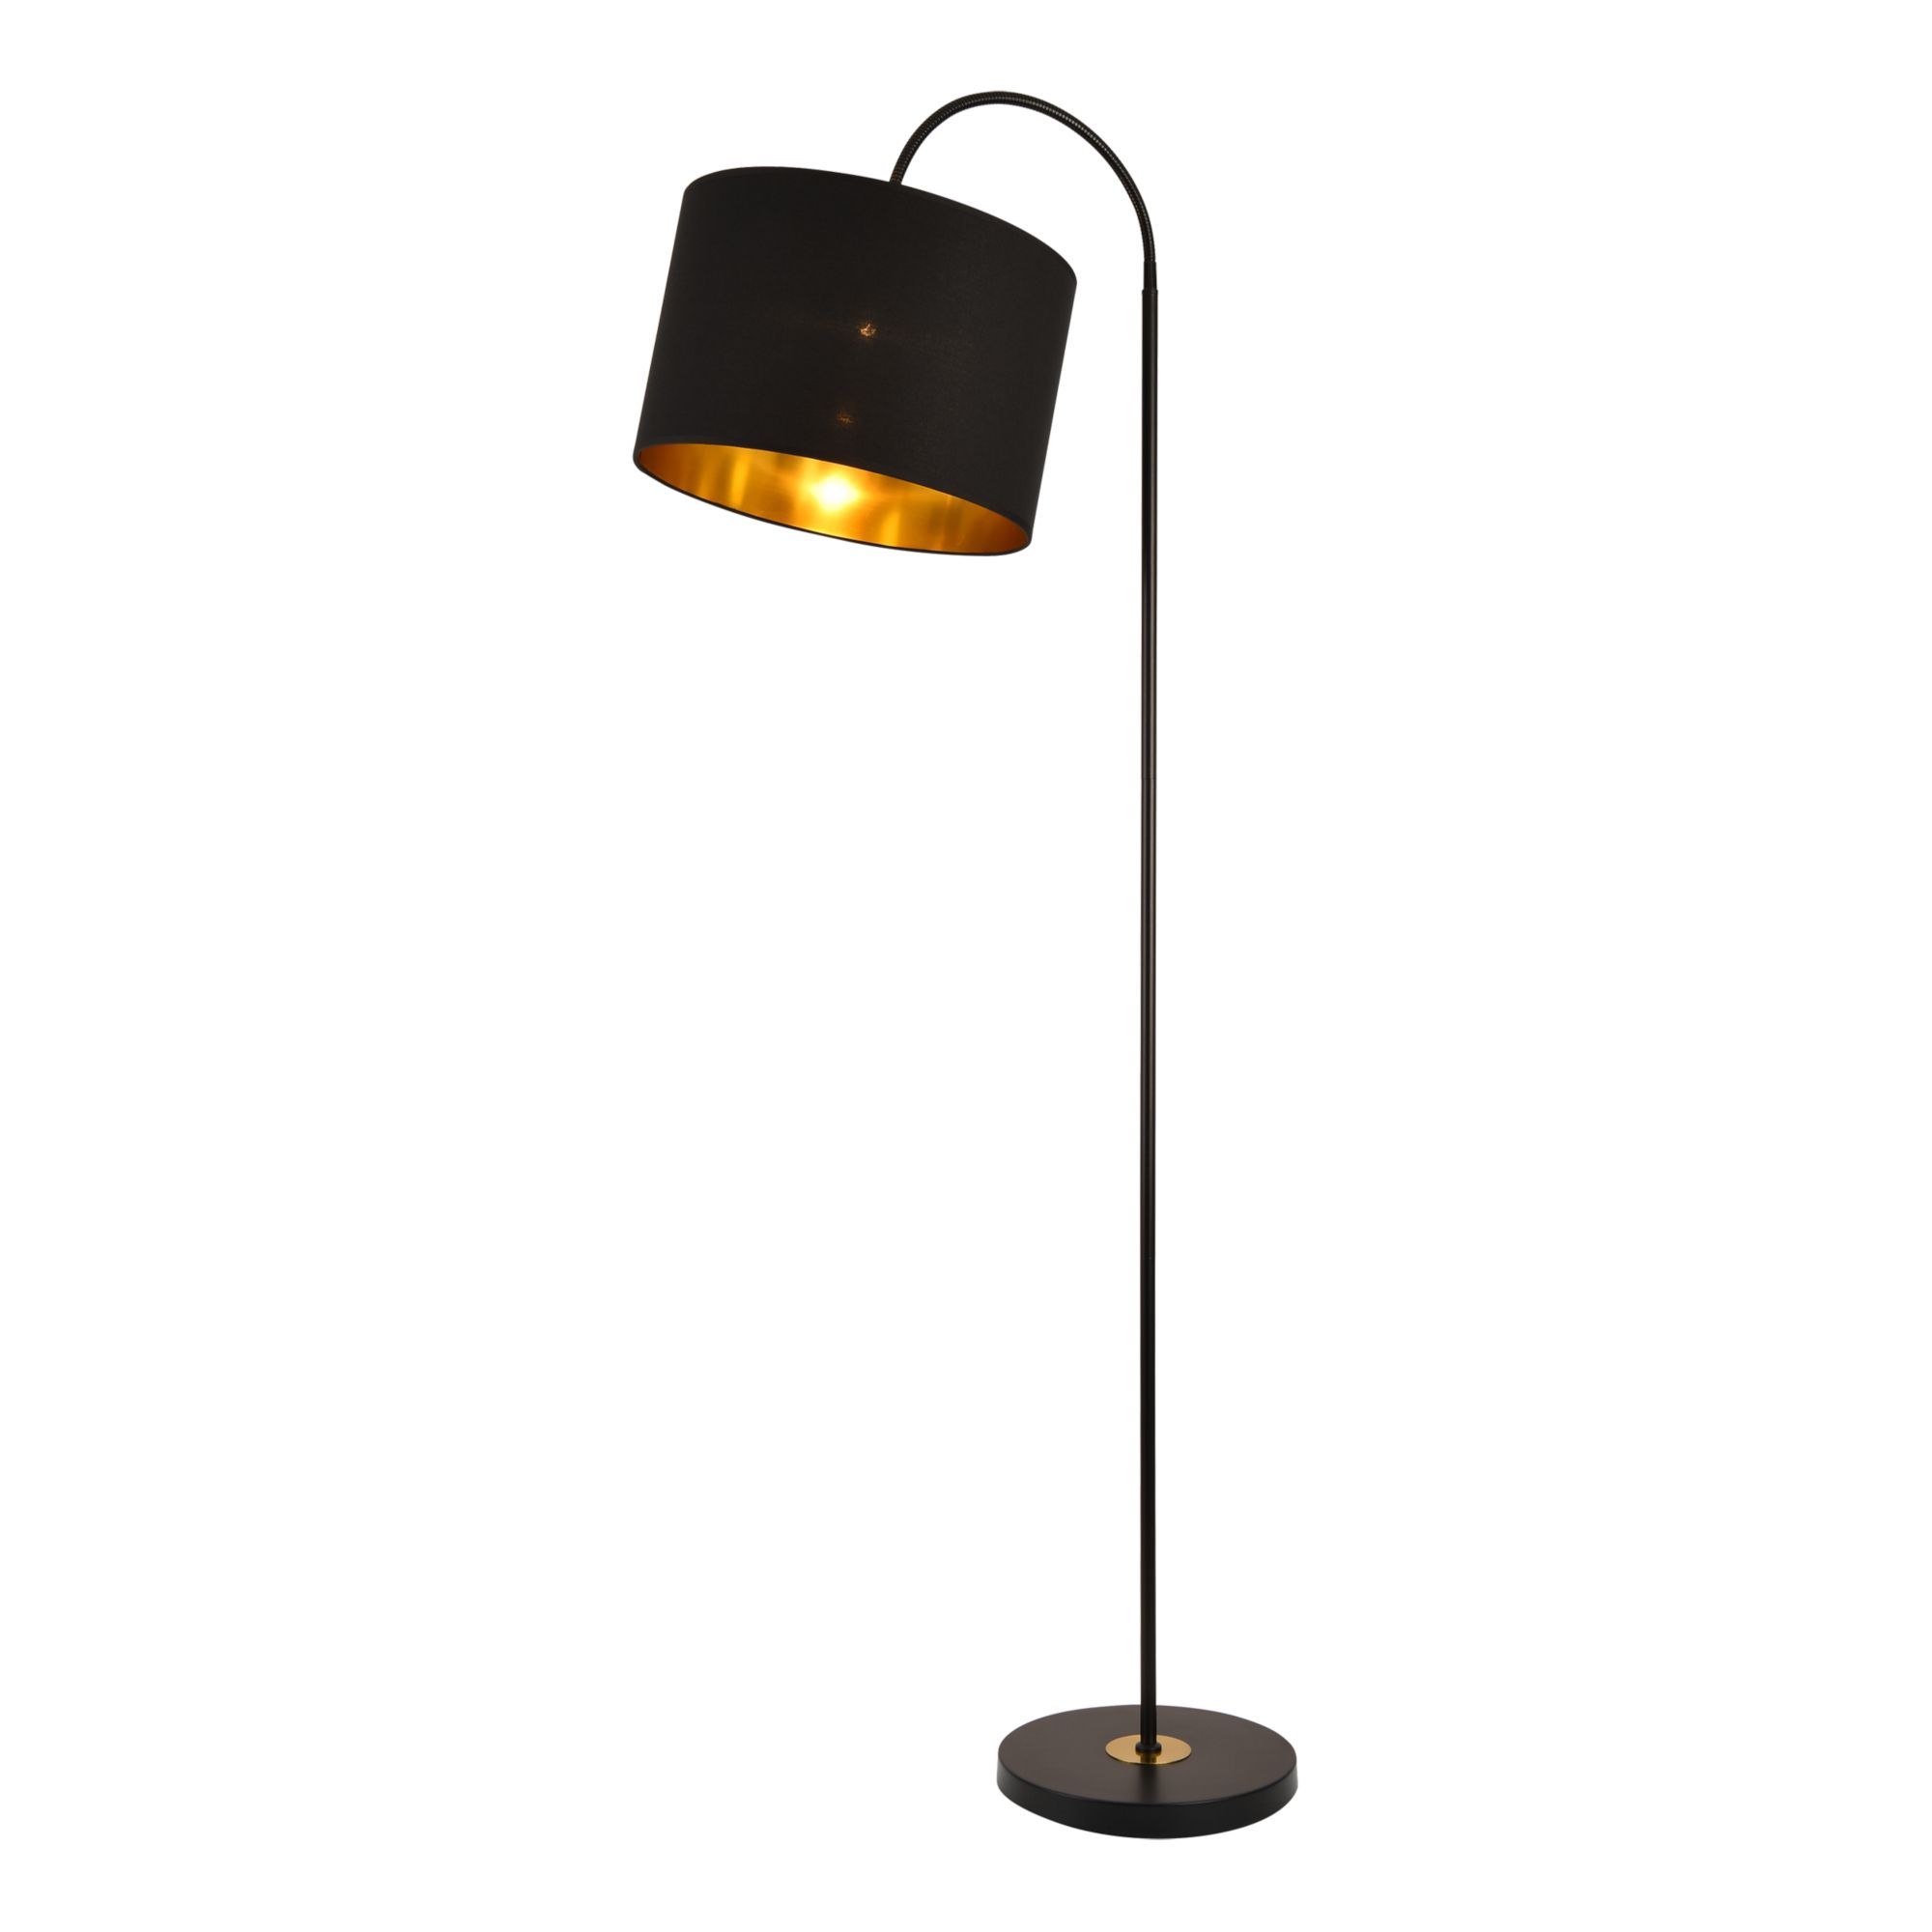 [lux.pro] Stojací lampa \"Toledo\" HT191005 - H.T. Trade Service GmbH & Co. KG